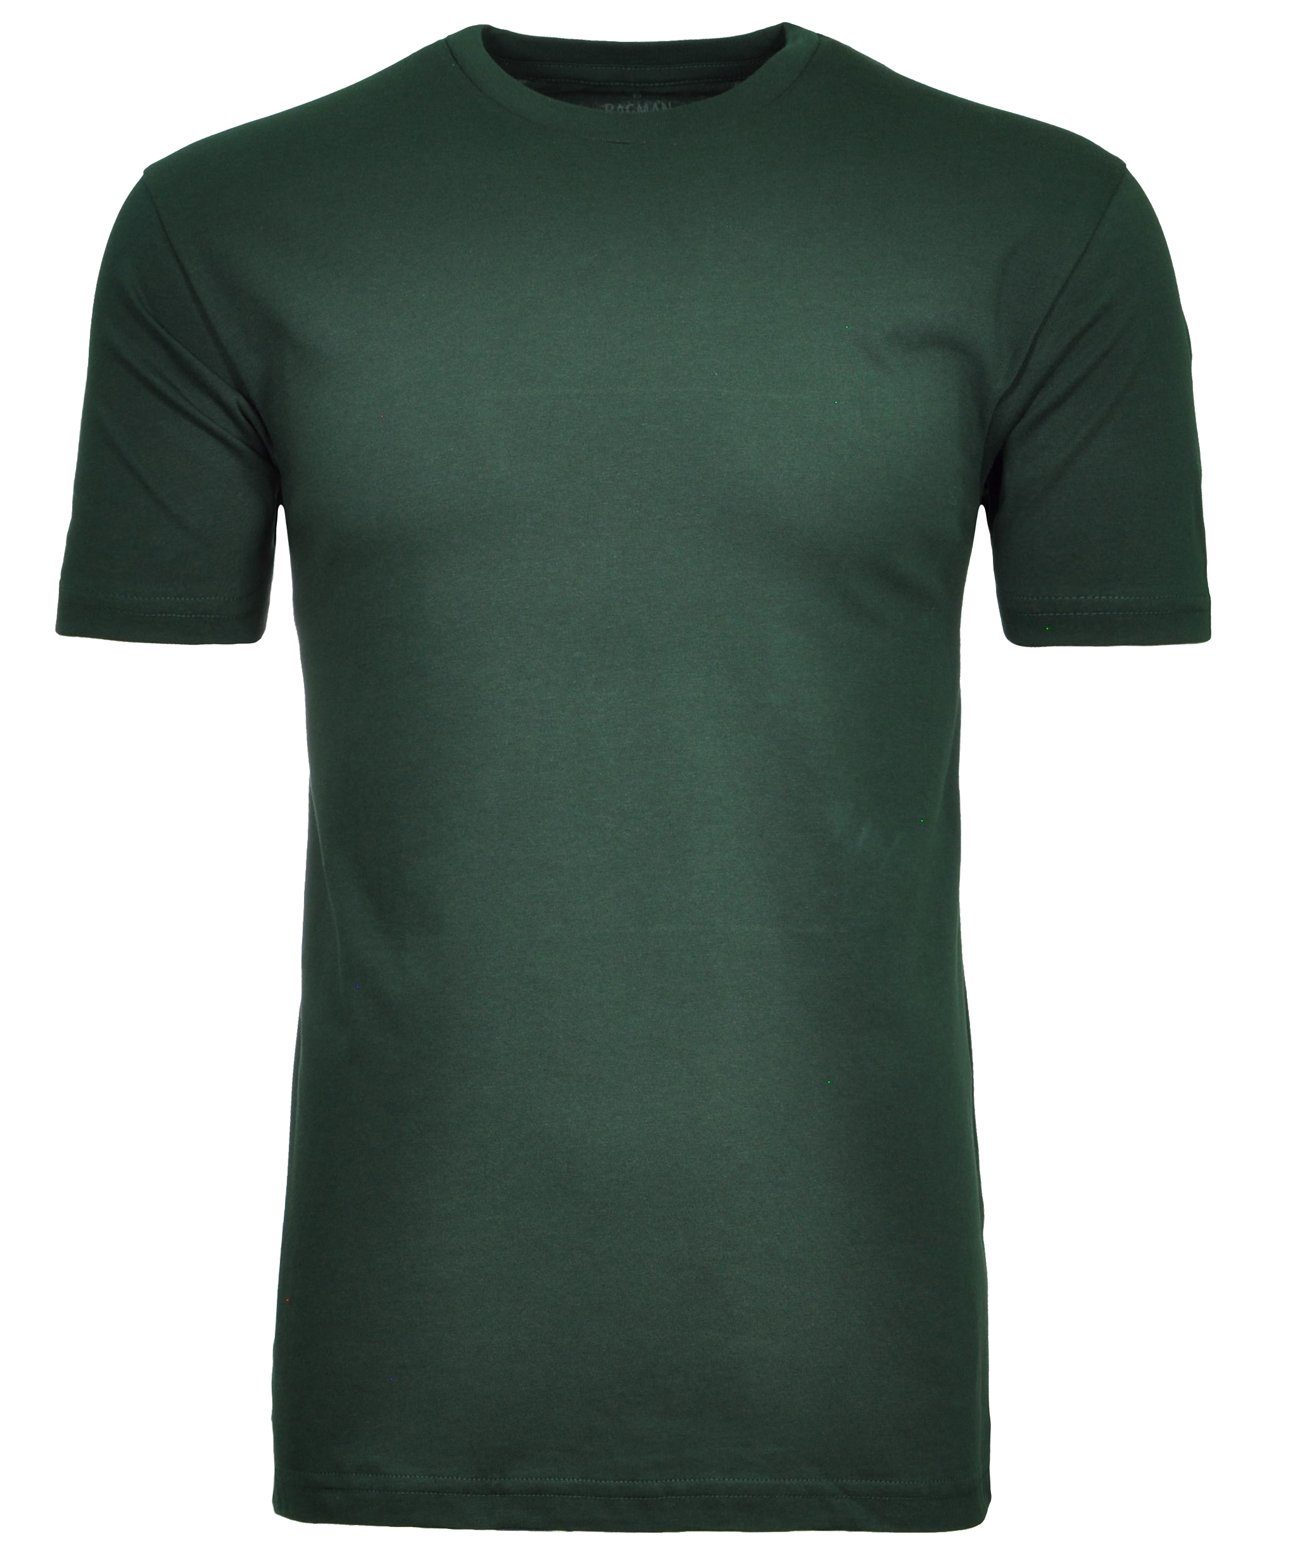 Dunkelgrün-386 T-Shirt RAGMAN